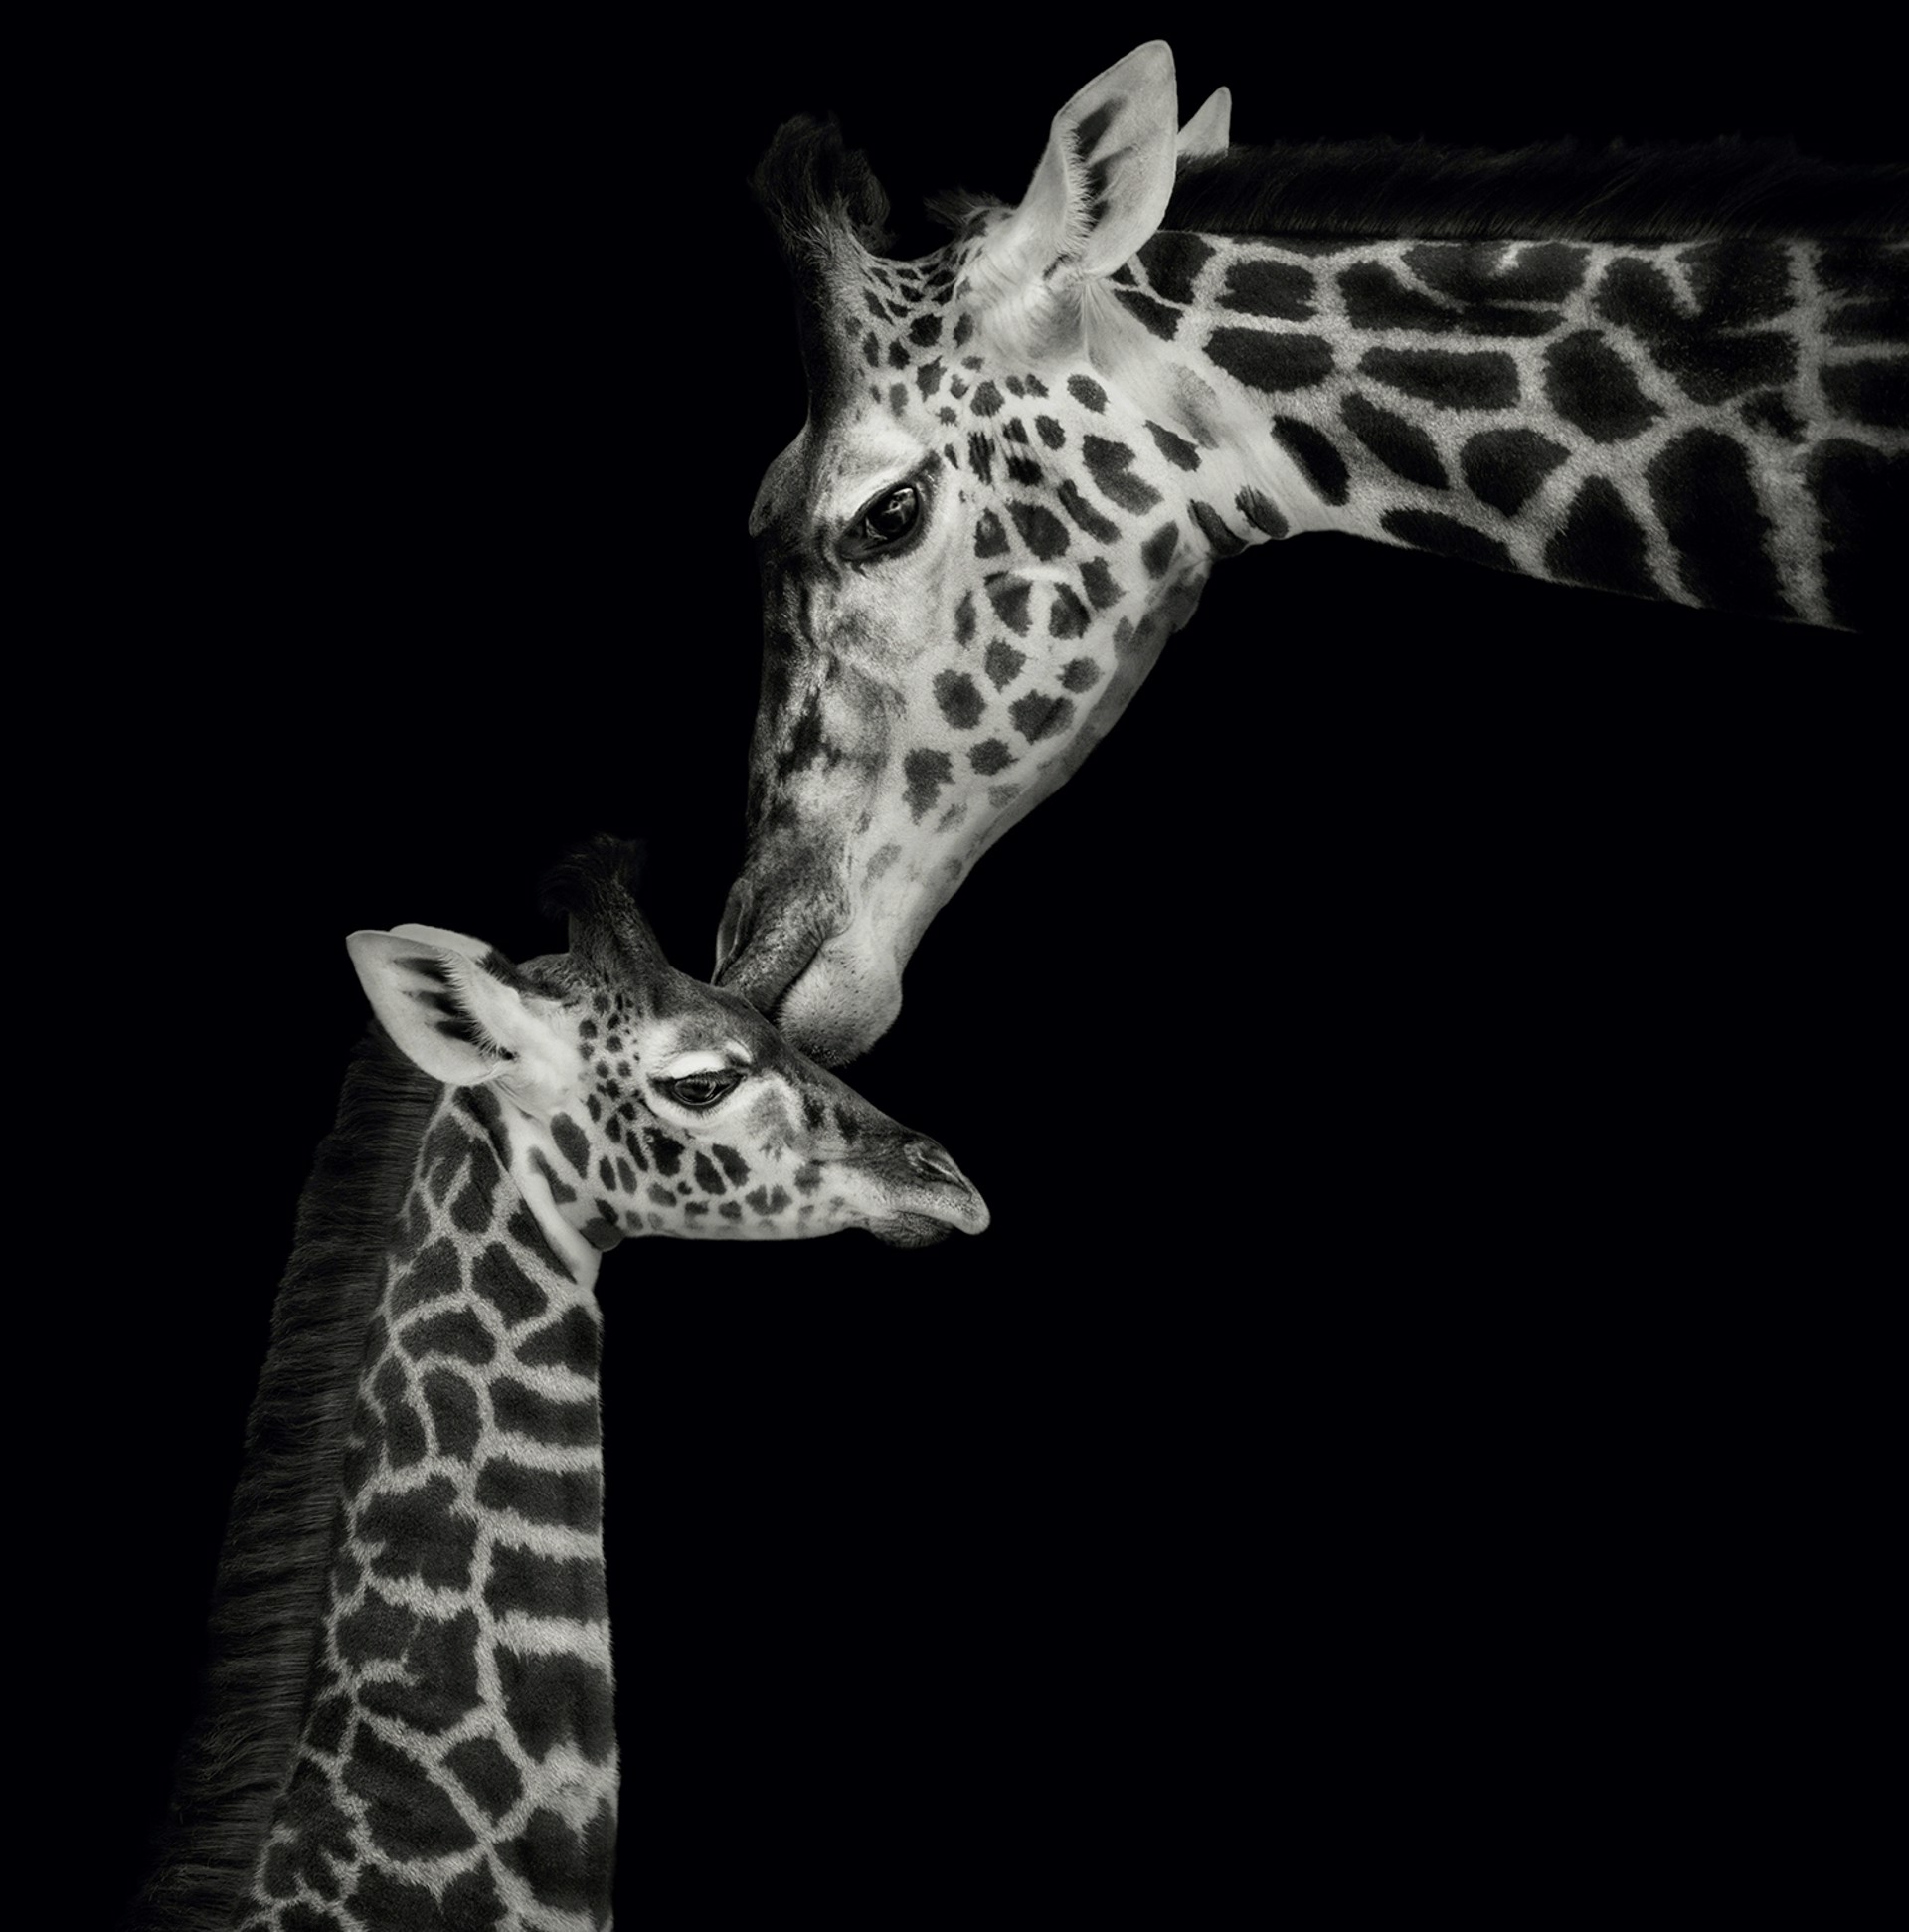 Portrait of Giraffes by Lauren Chambers